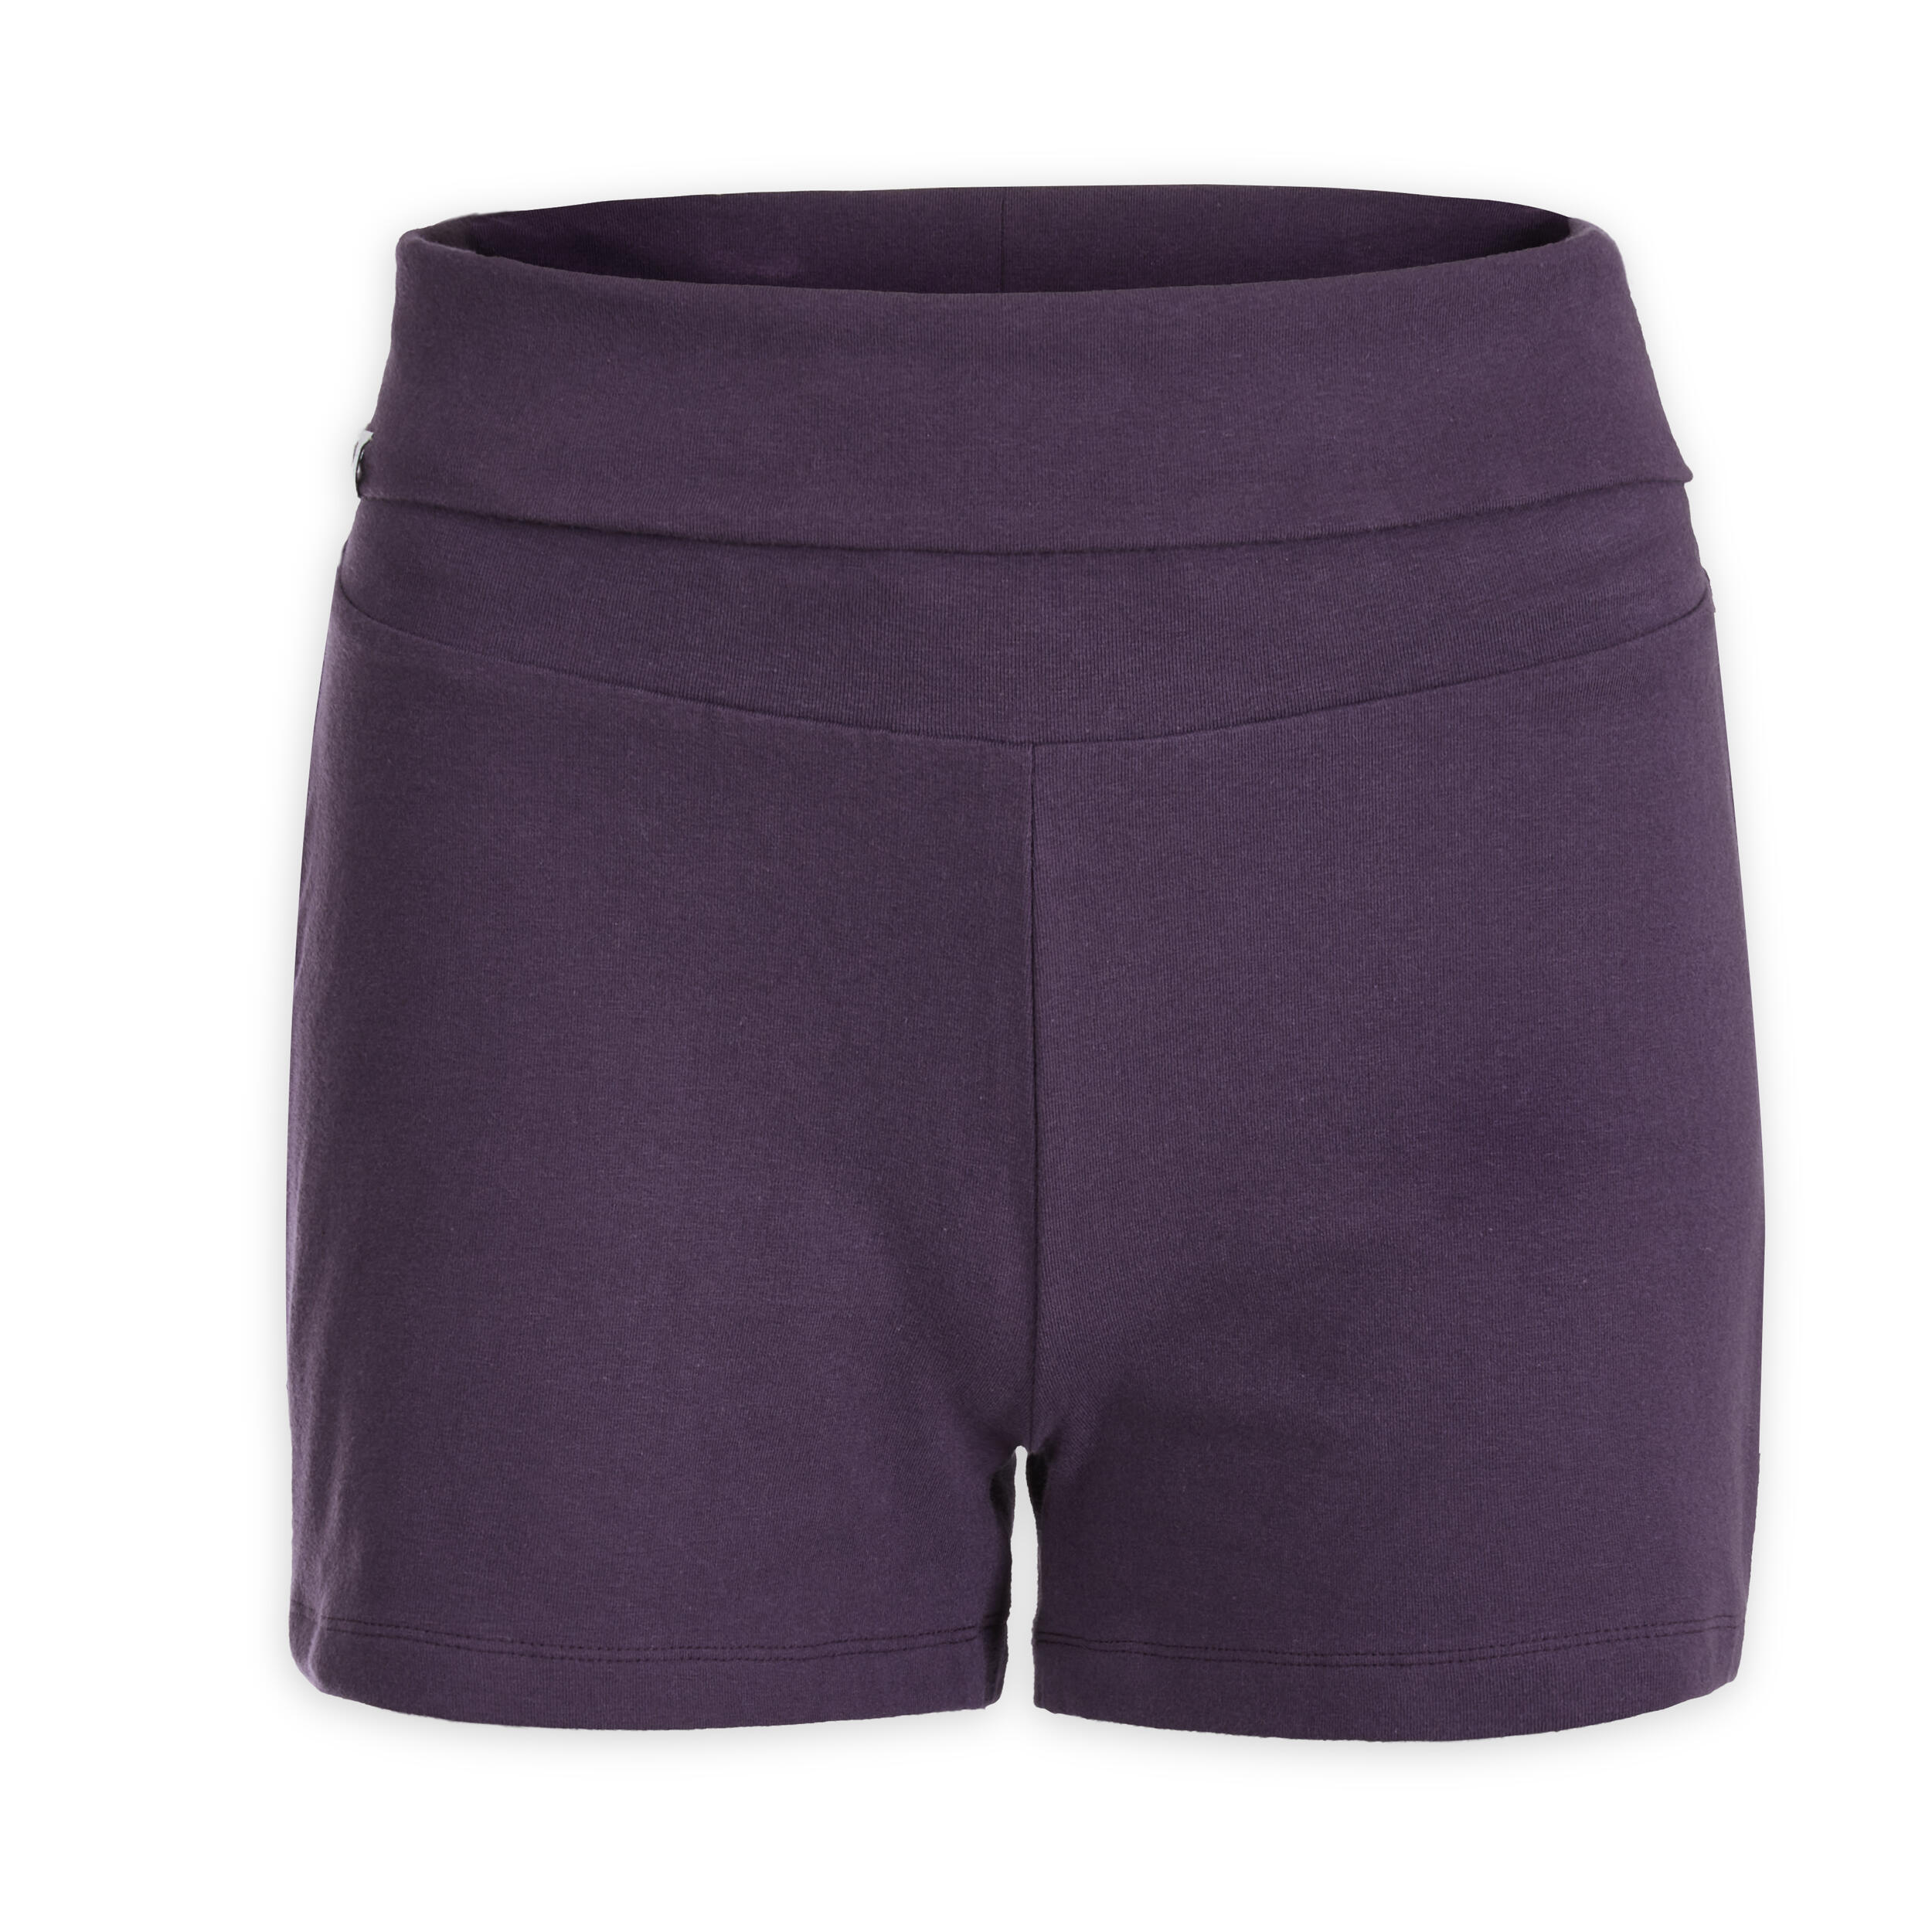 Women's Cotton Yoga Shorts - Purple 5/7